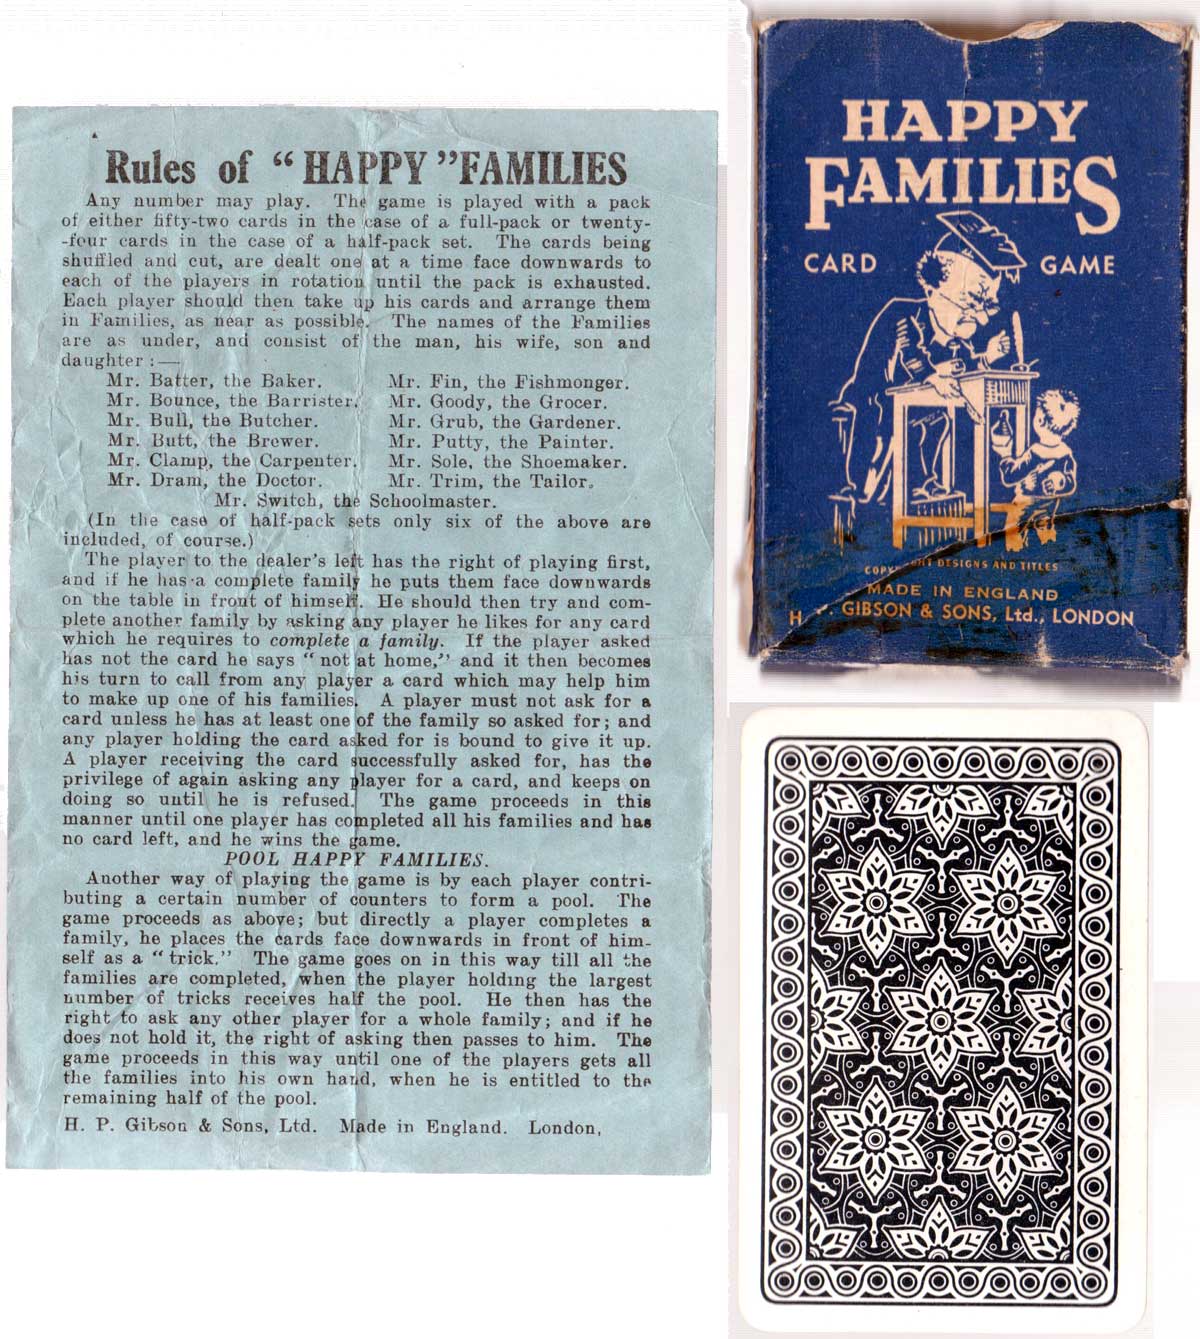 Cheery Families economy edition printed by De La Rue & Co., Ltd, c.1930s